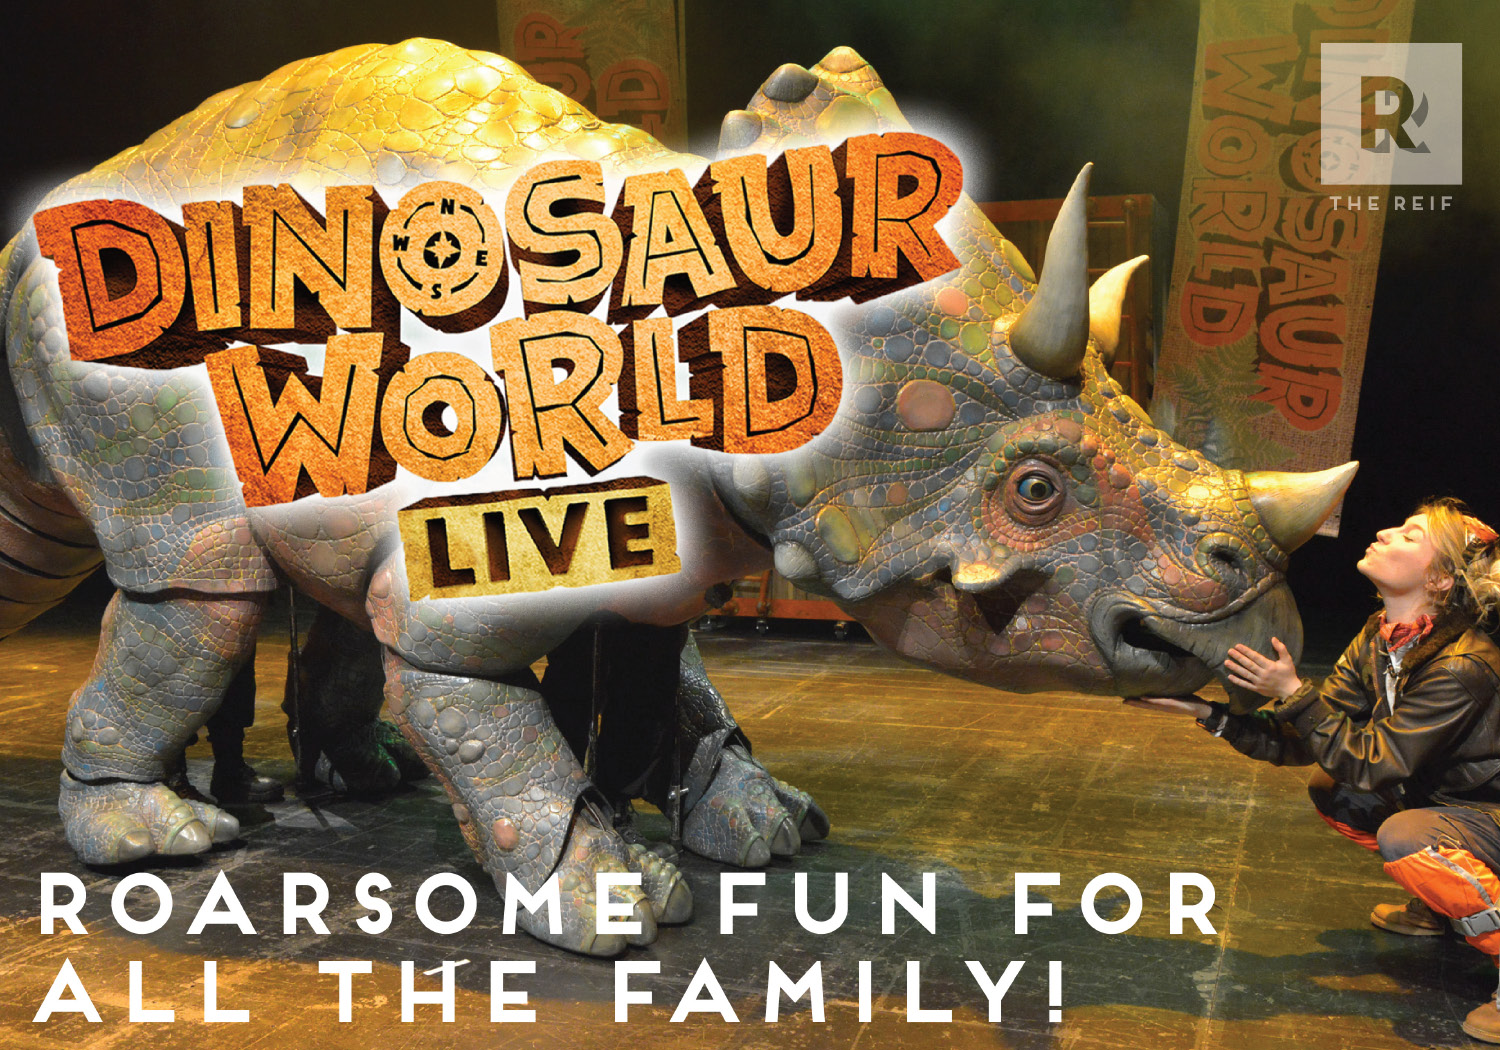 Reif Dinosaur World Live